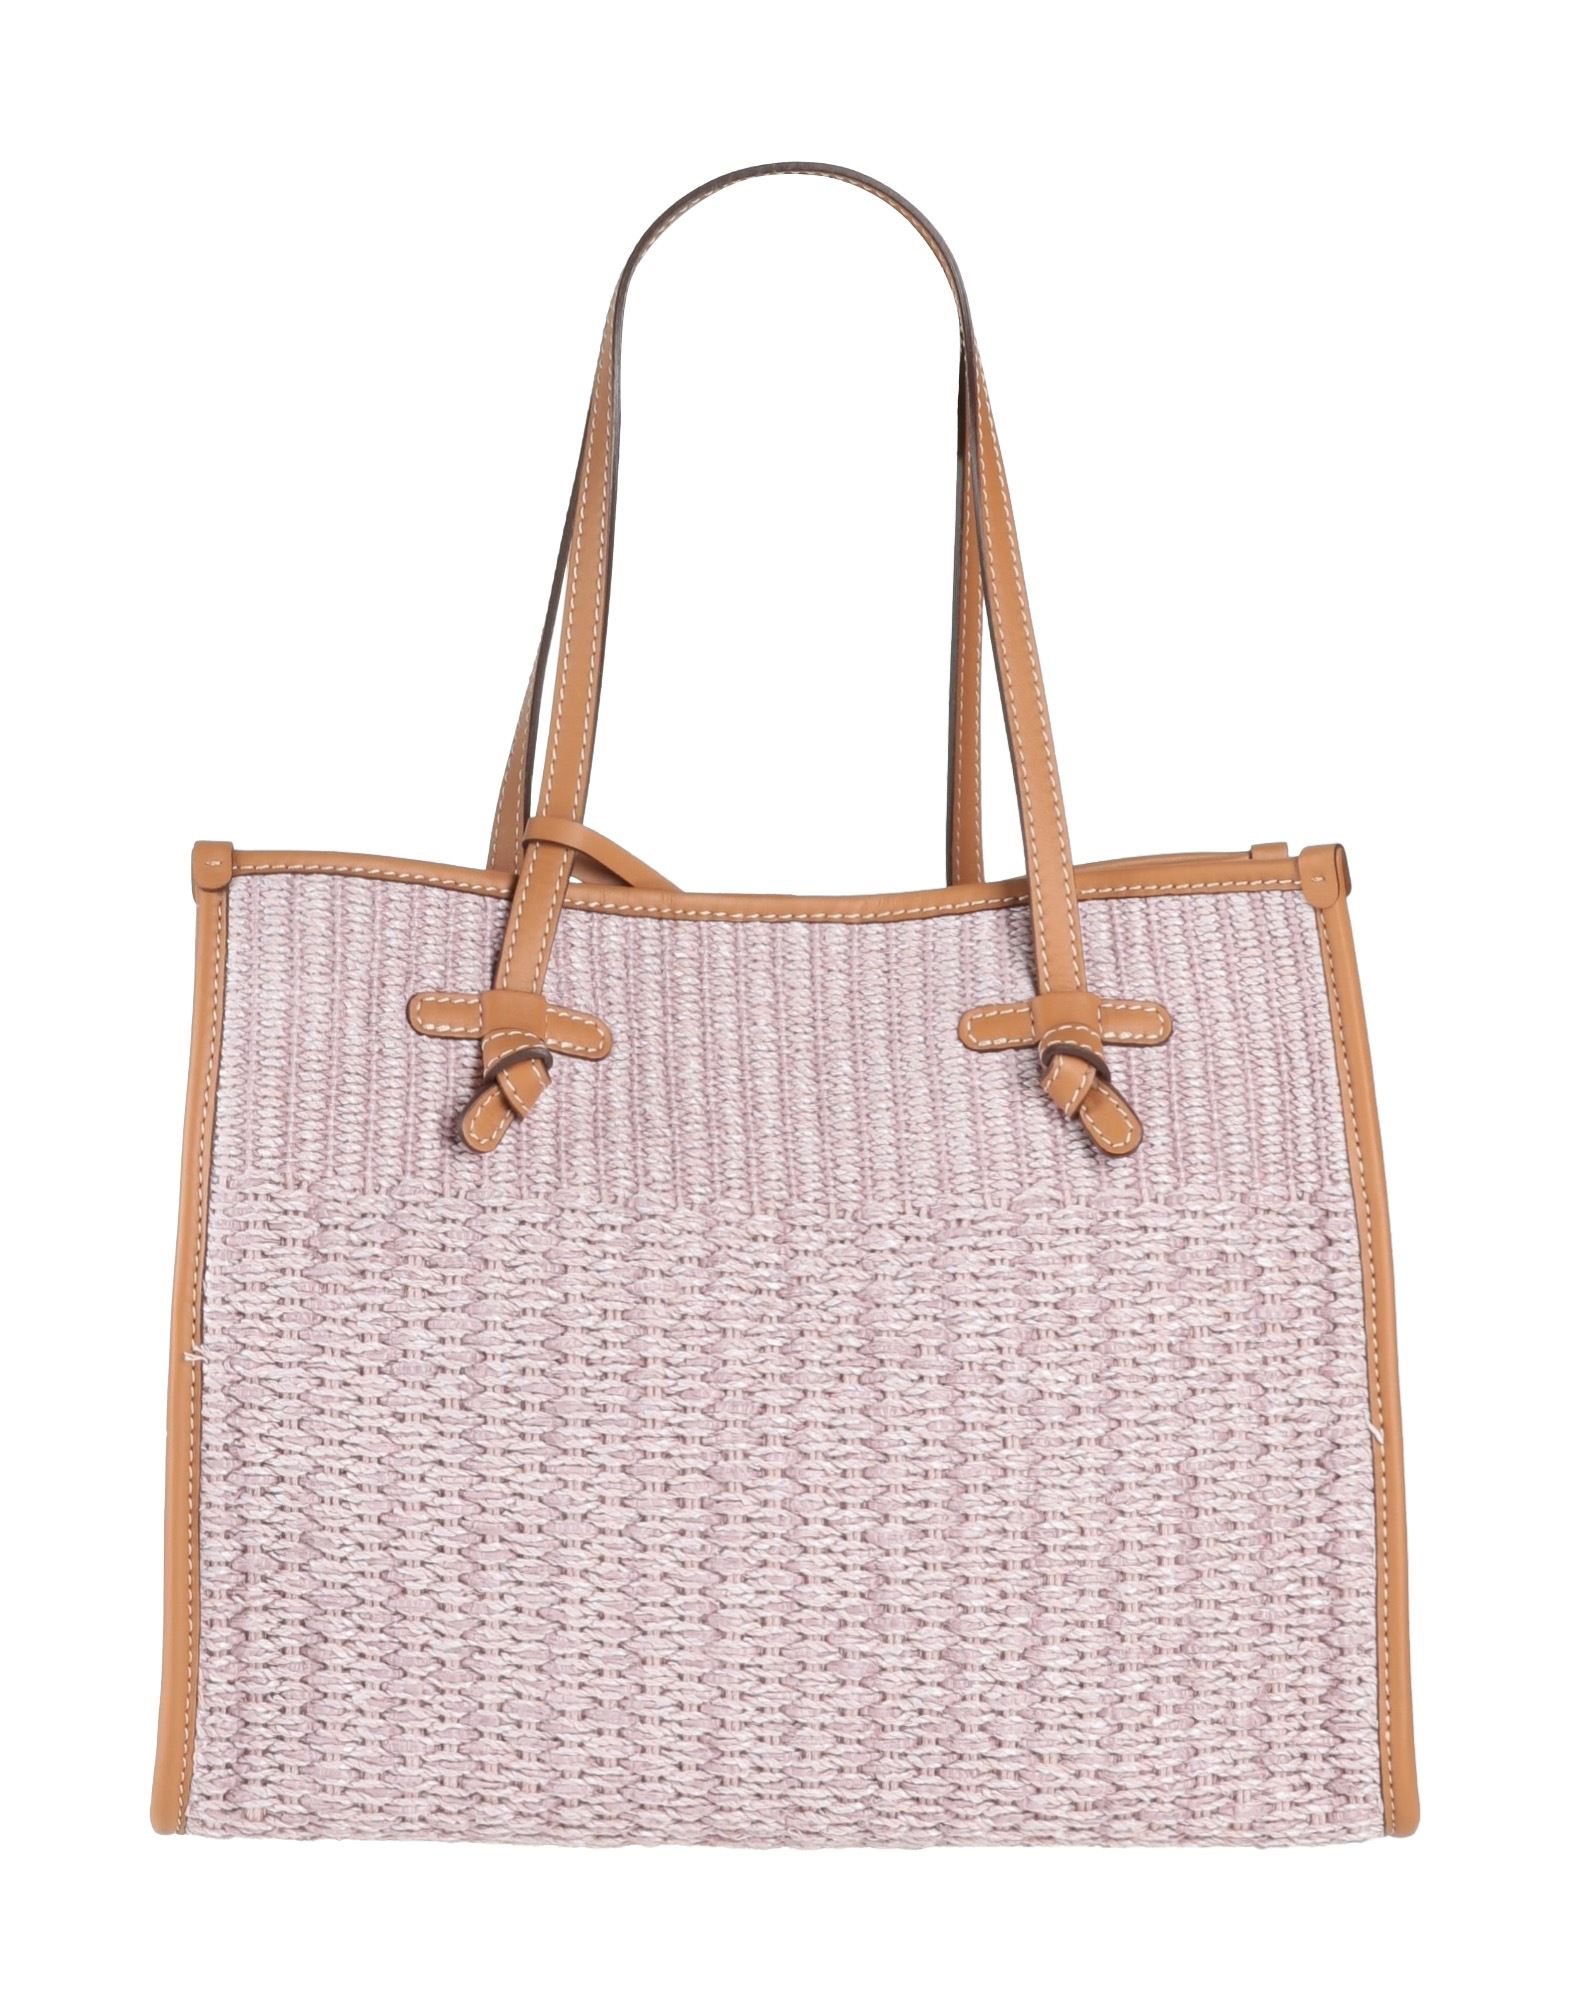 Marcella Club Gianni Chiarini Handbags In Lilac